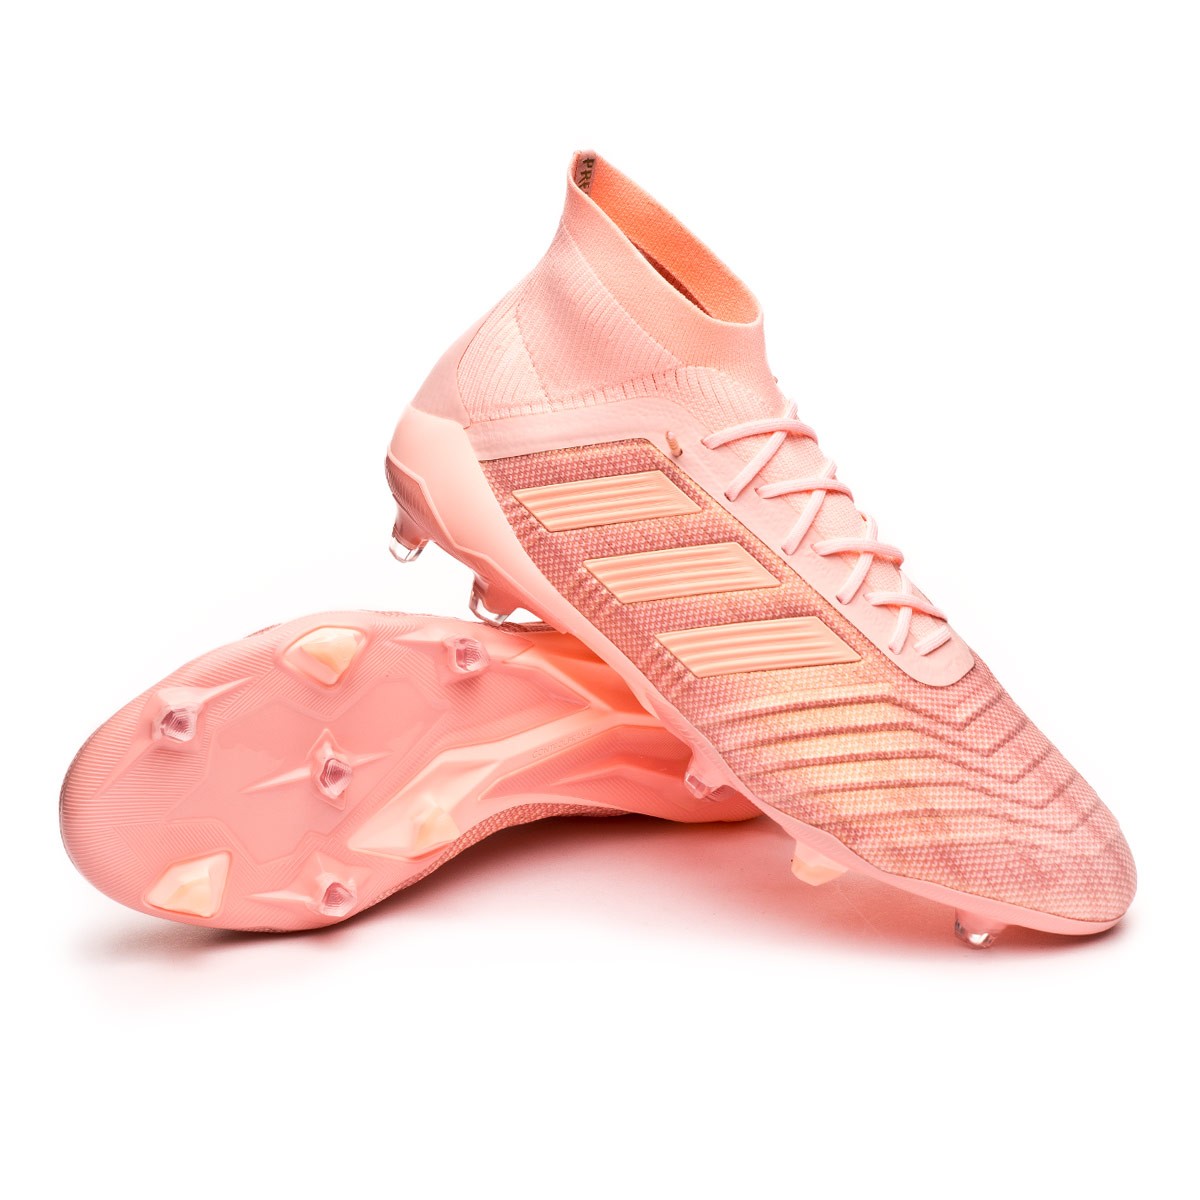 adidas predator 18.1 trace pink